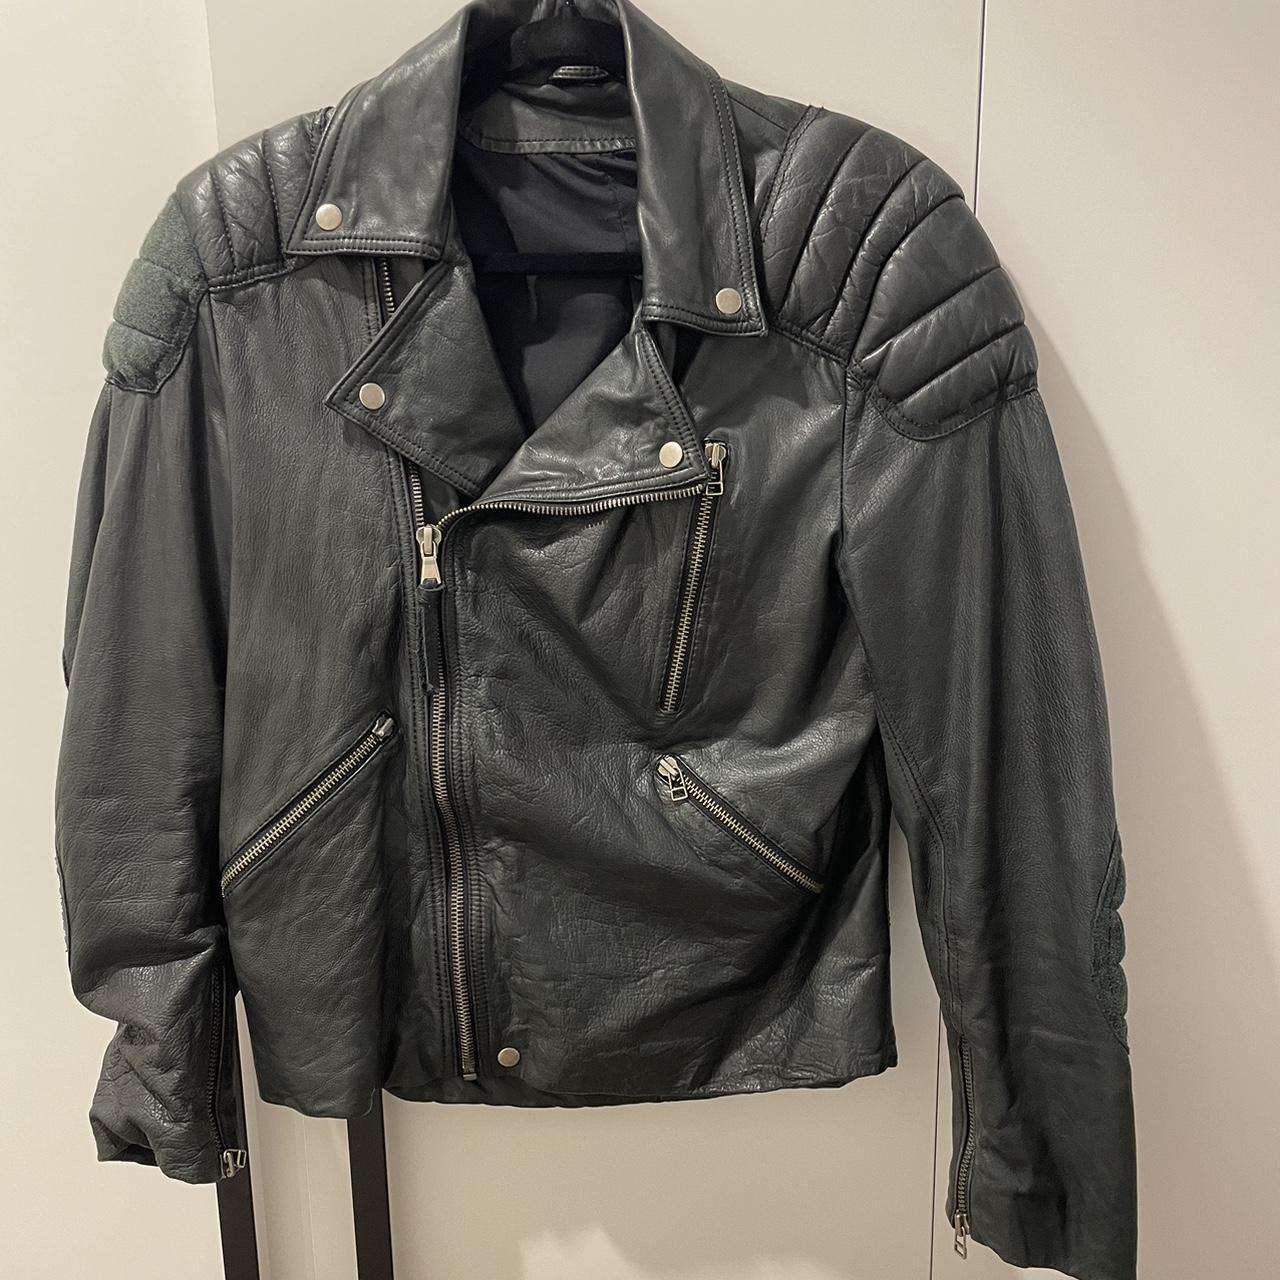 Acne Studios Theo Leather Jacket Black men’s leather... - Depop